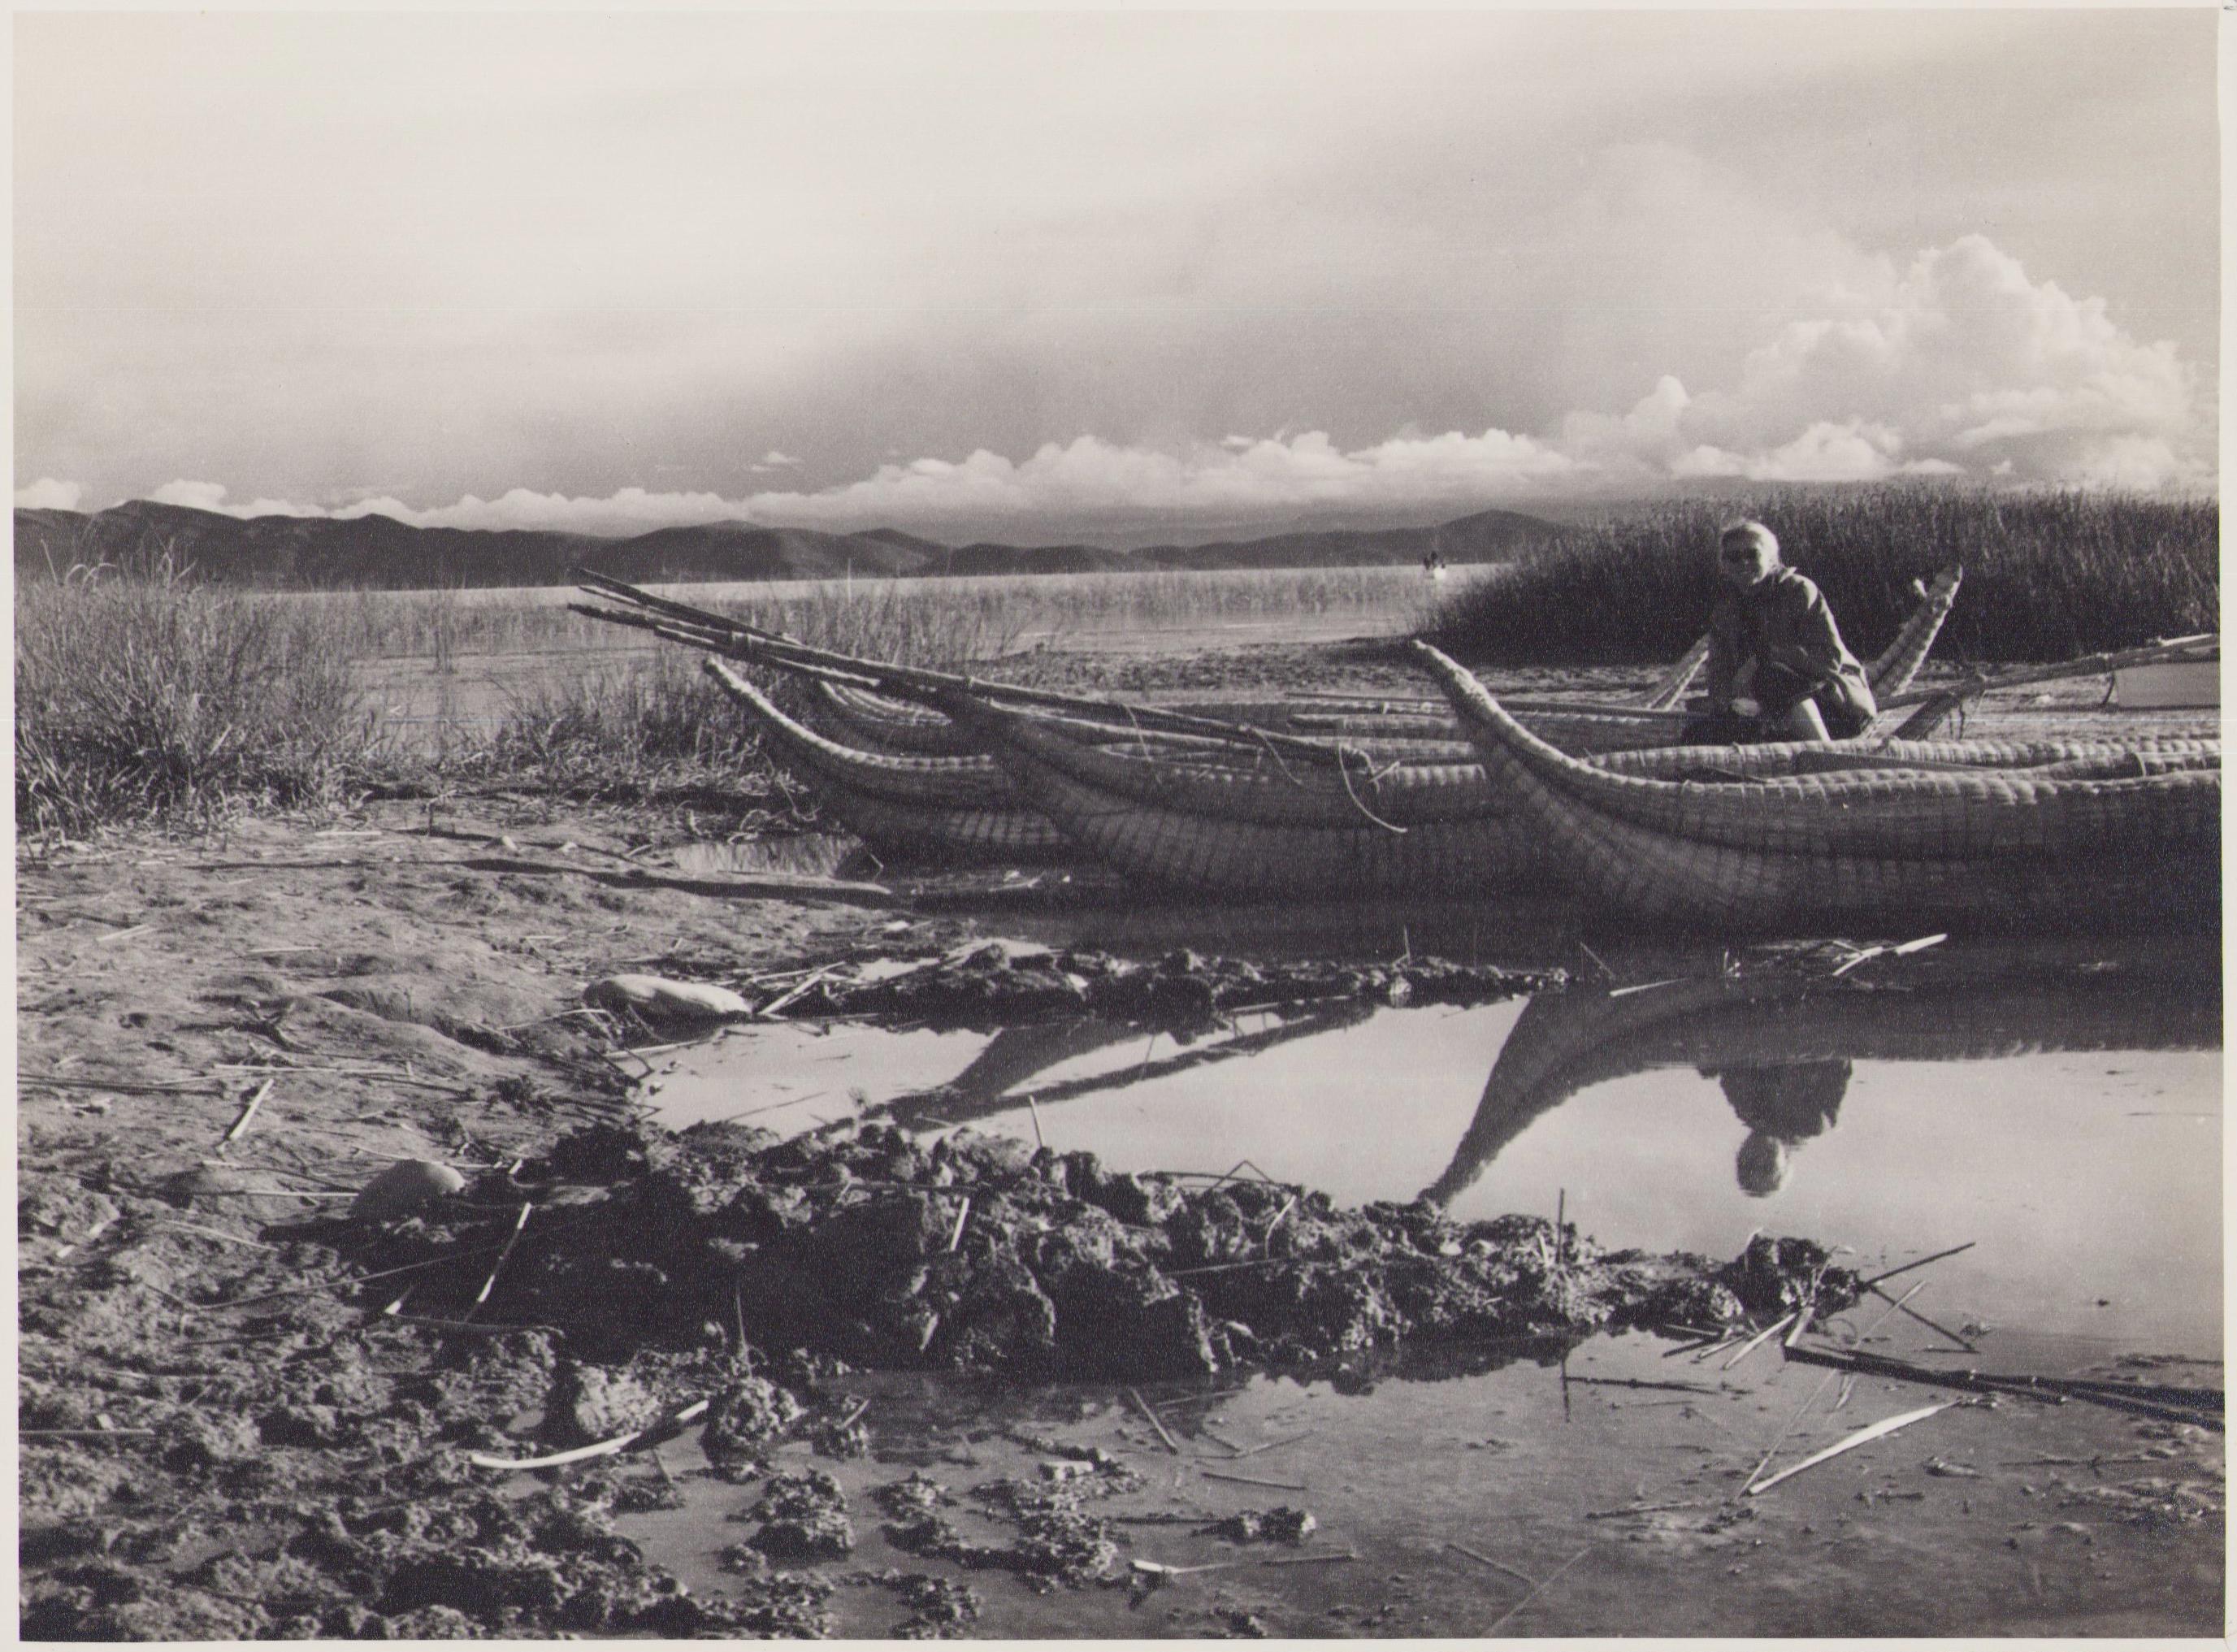 Hanna Seidel Portrait Photograph - Bolivia, Boats, Black and White Photography, 1960s, 17, 3 x 23, 4 cm